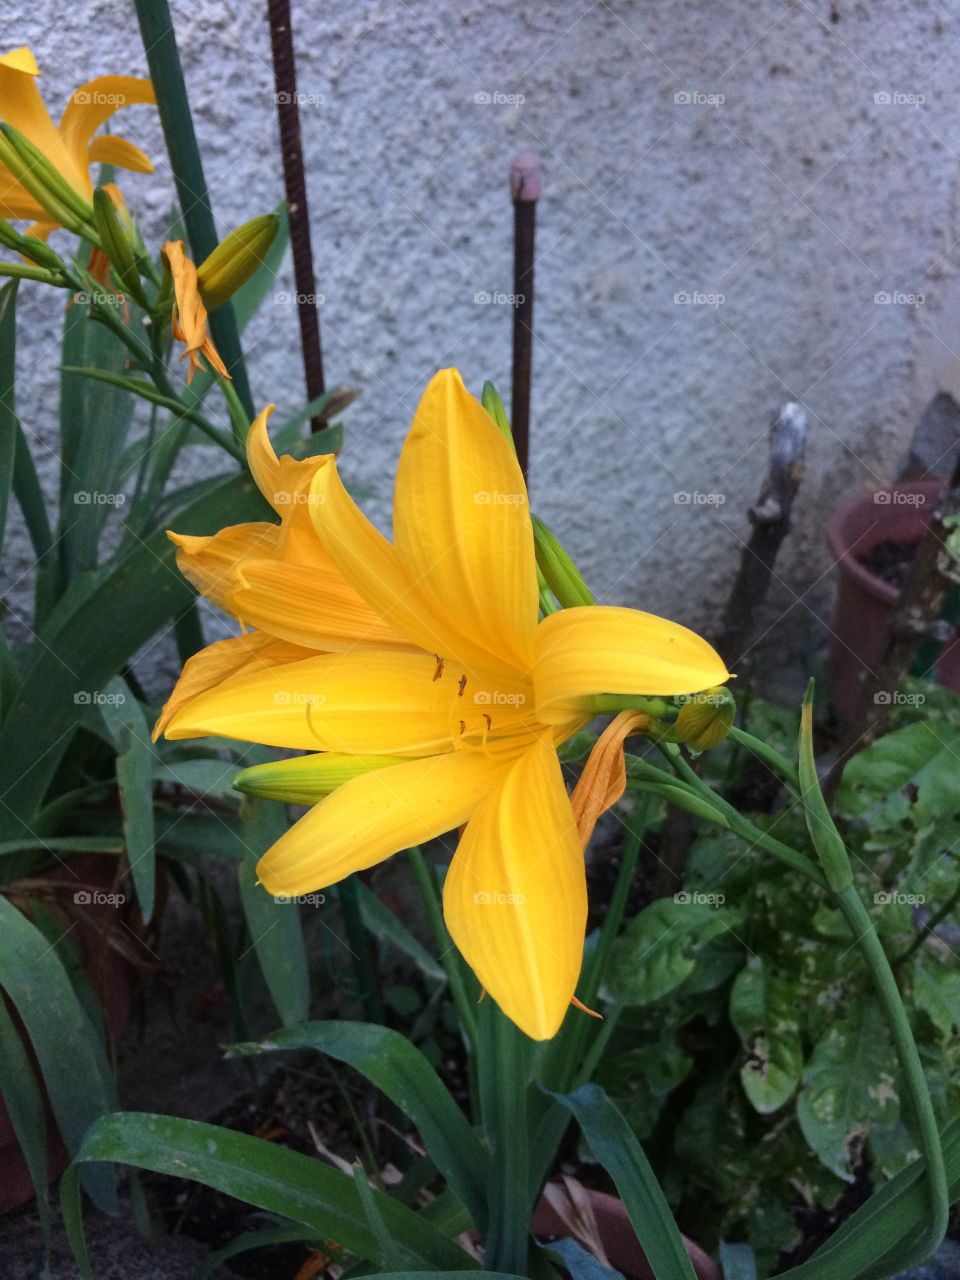 Flower yello lily